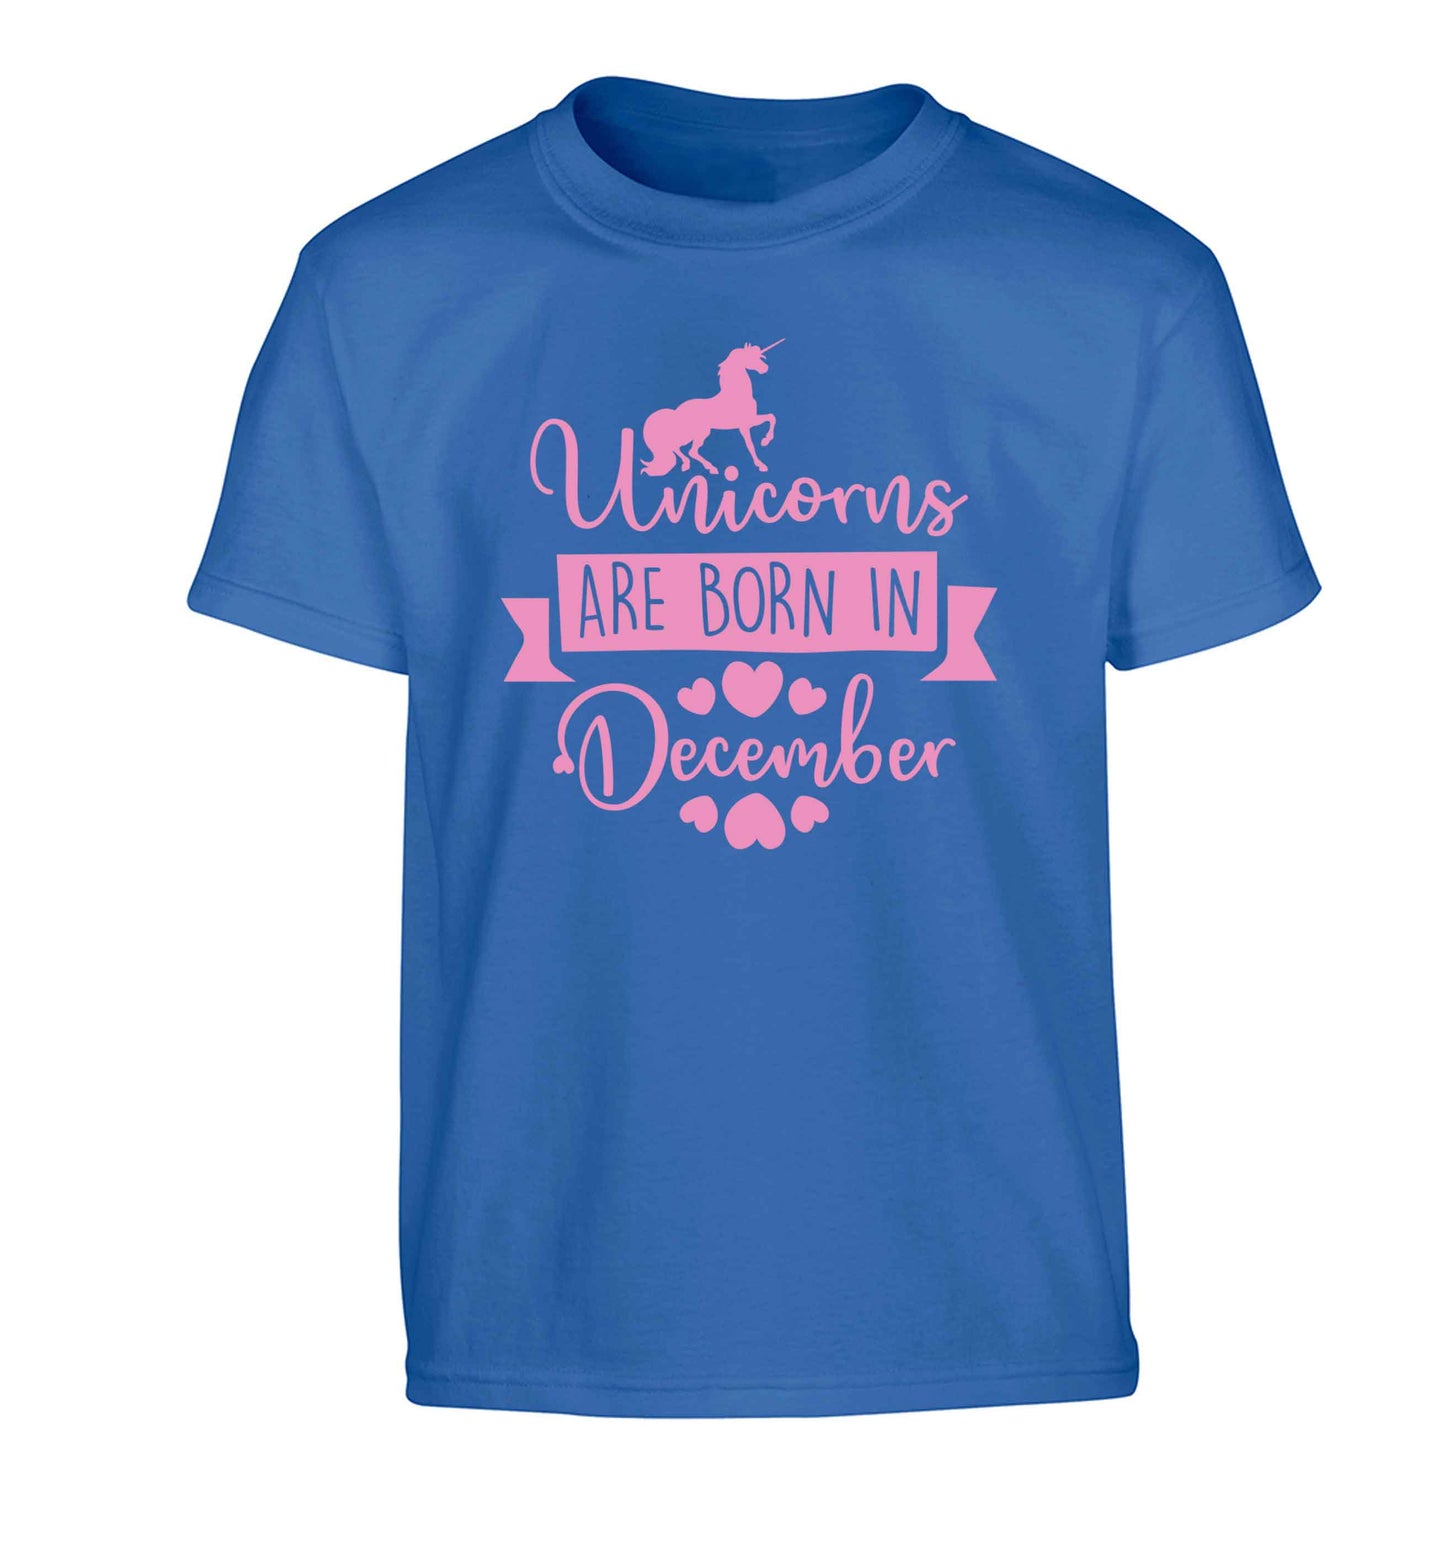 Unicorns are born in December Children's blue Tshirt 12-13 Years